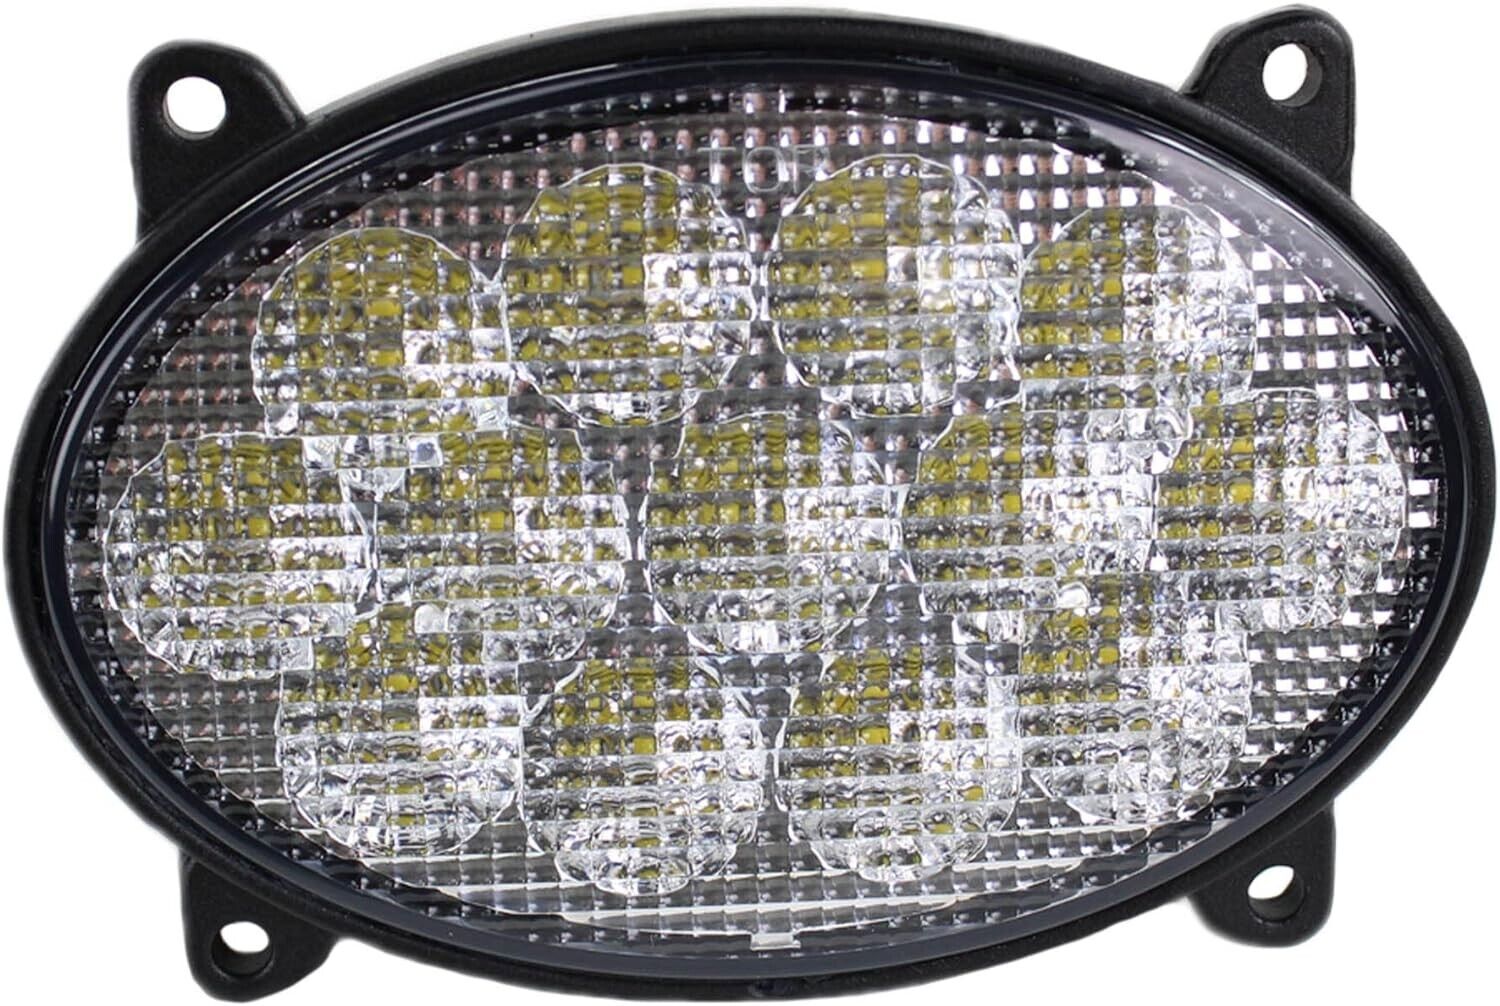 2 Count: E-86056892 LED Headlights Versatile/Buhler 190, 220, 250, 260, 265, 290